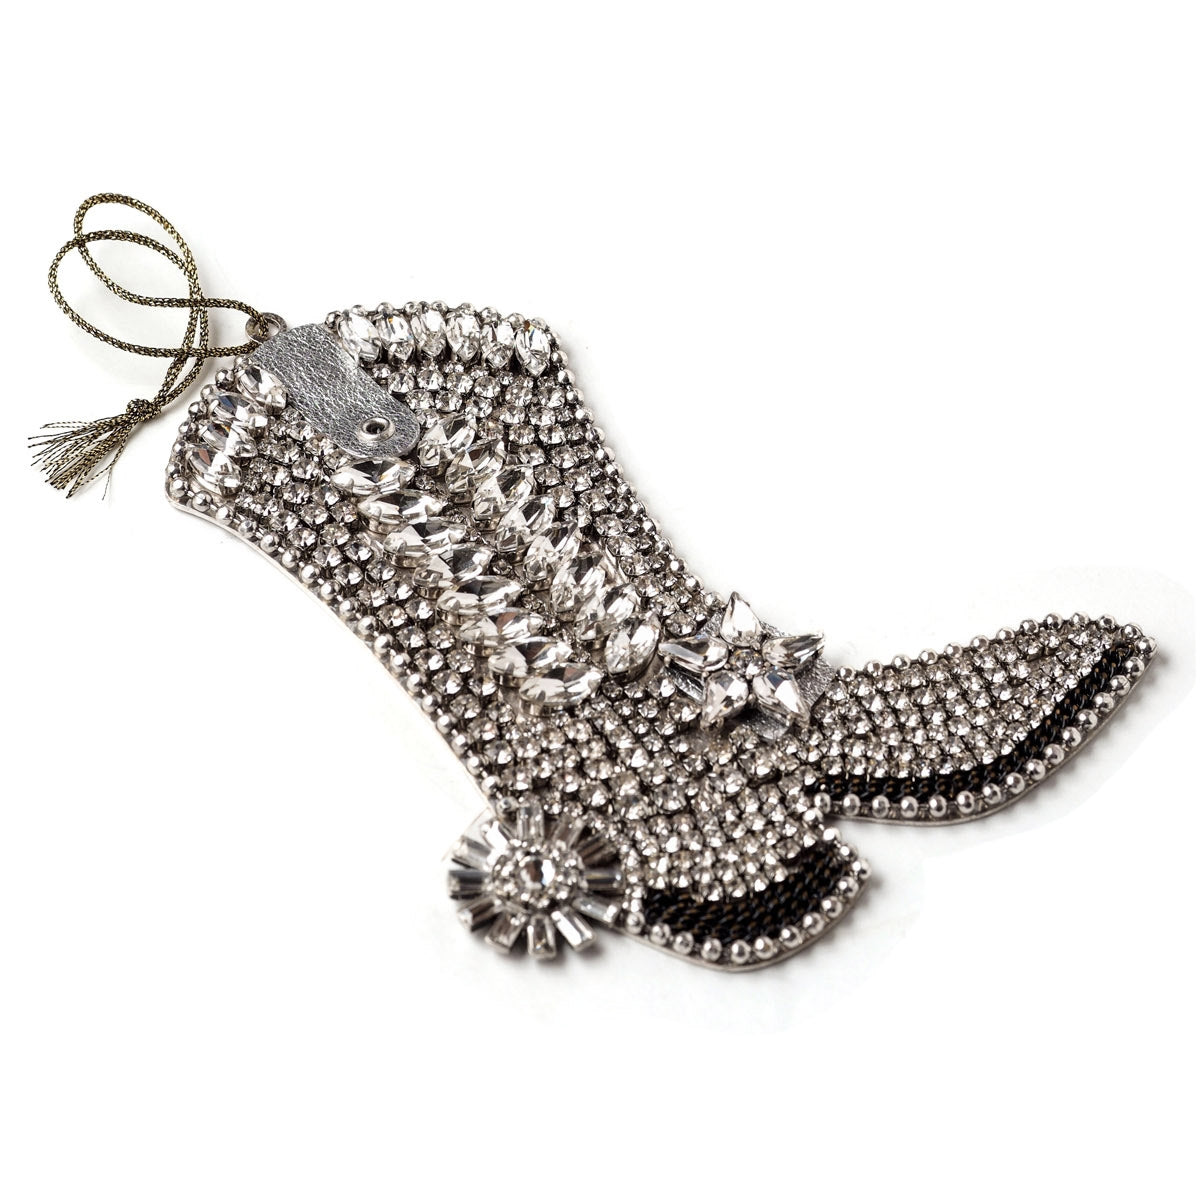 Bejeweled Cowboy Boot Ornament